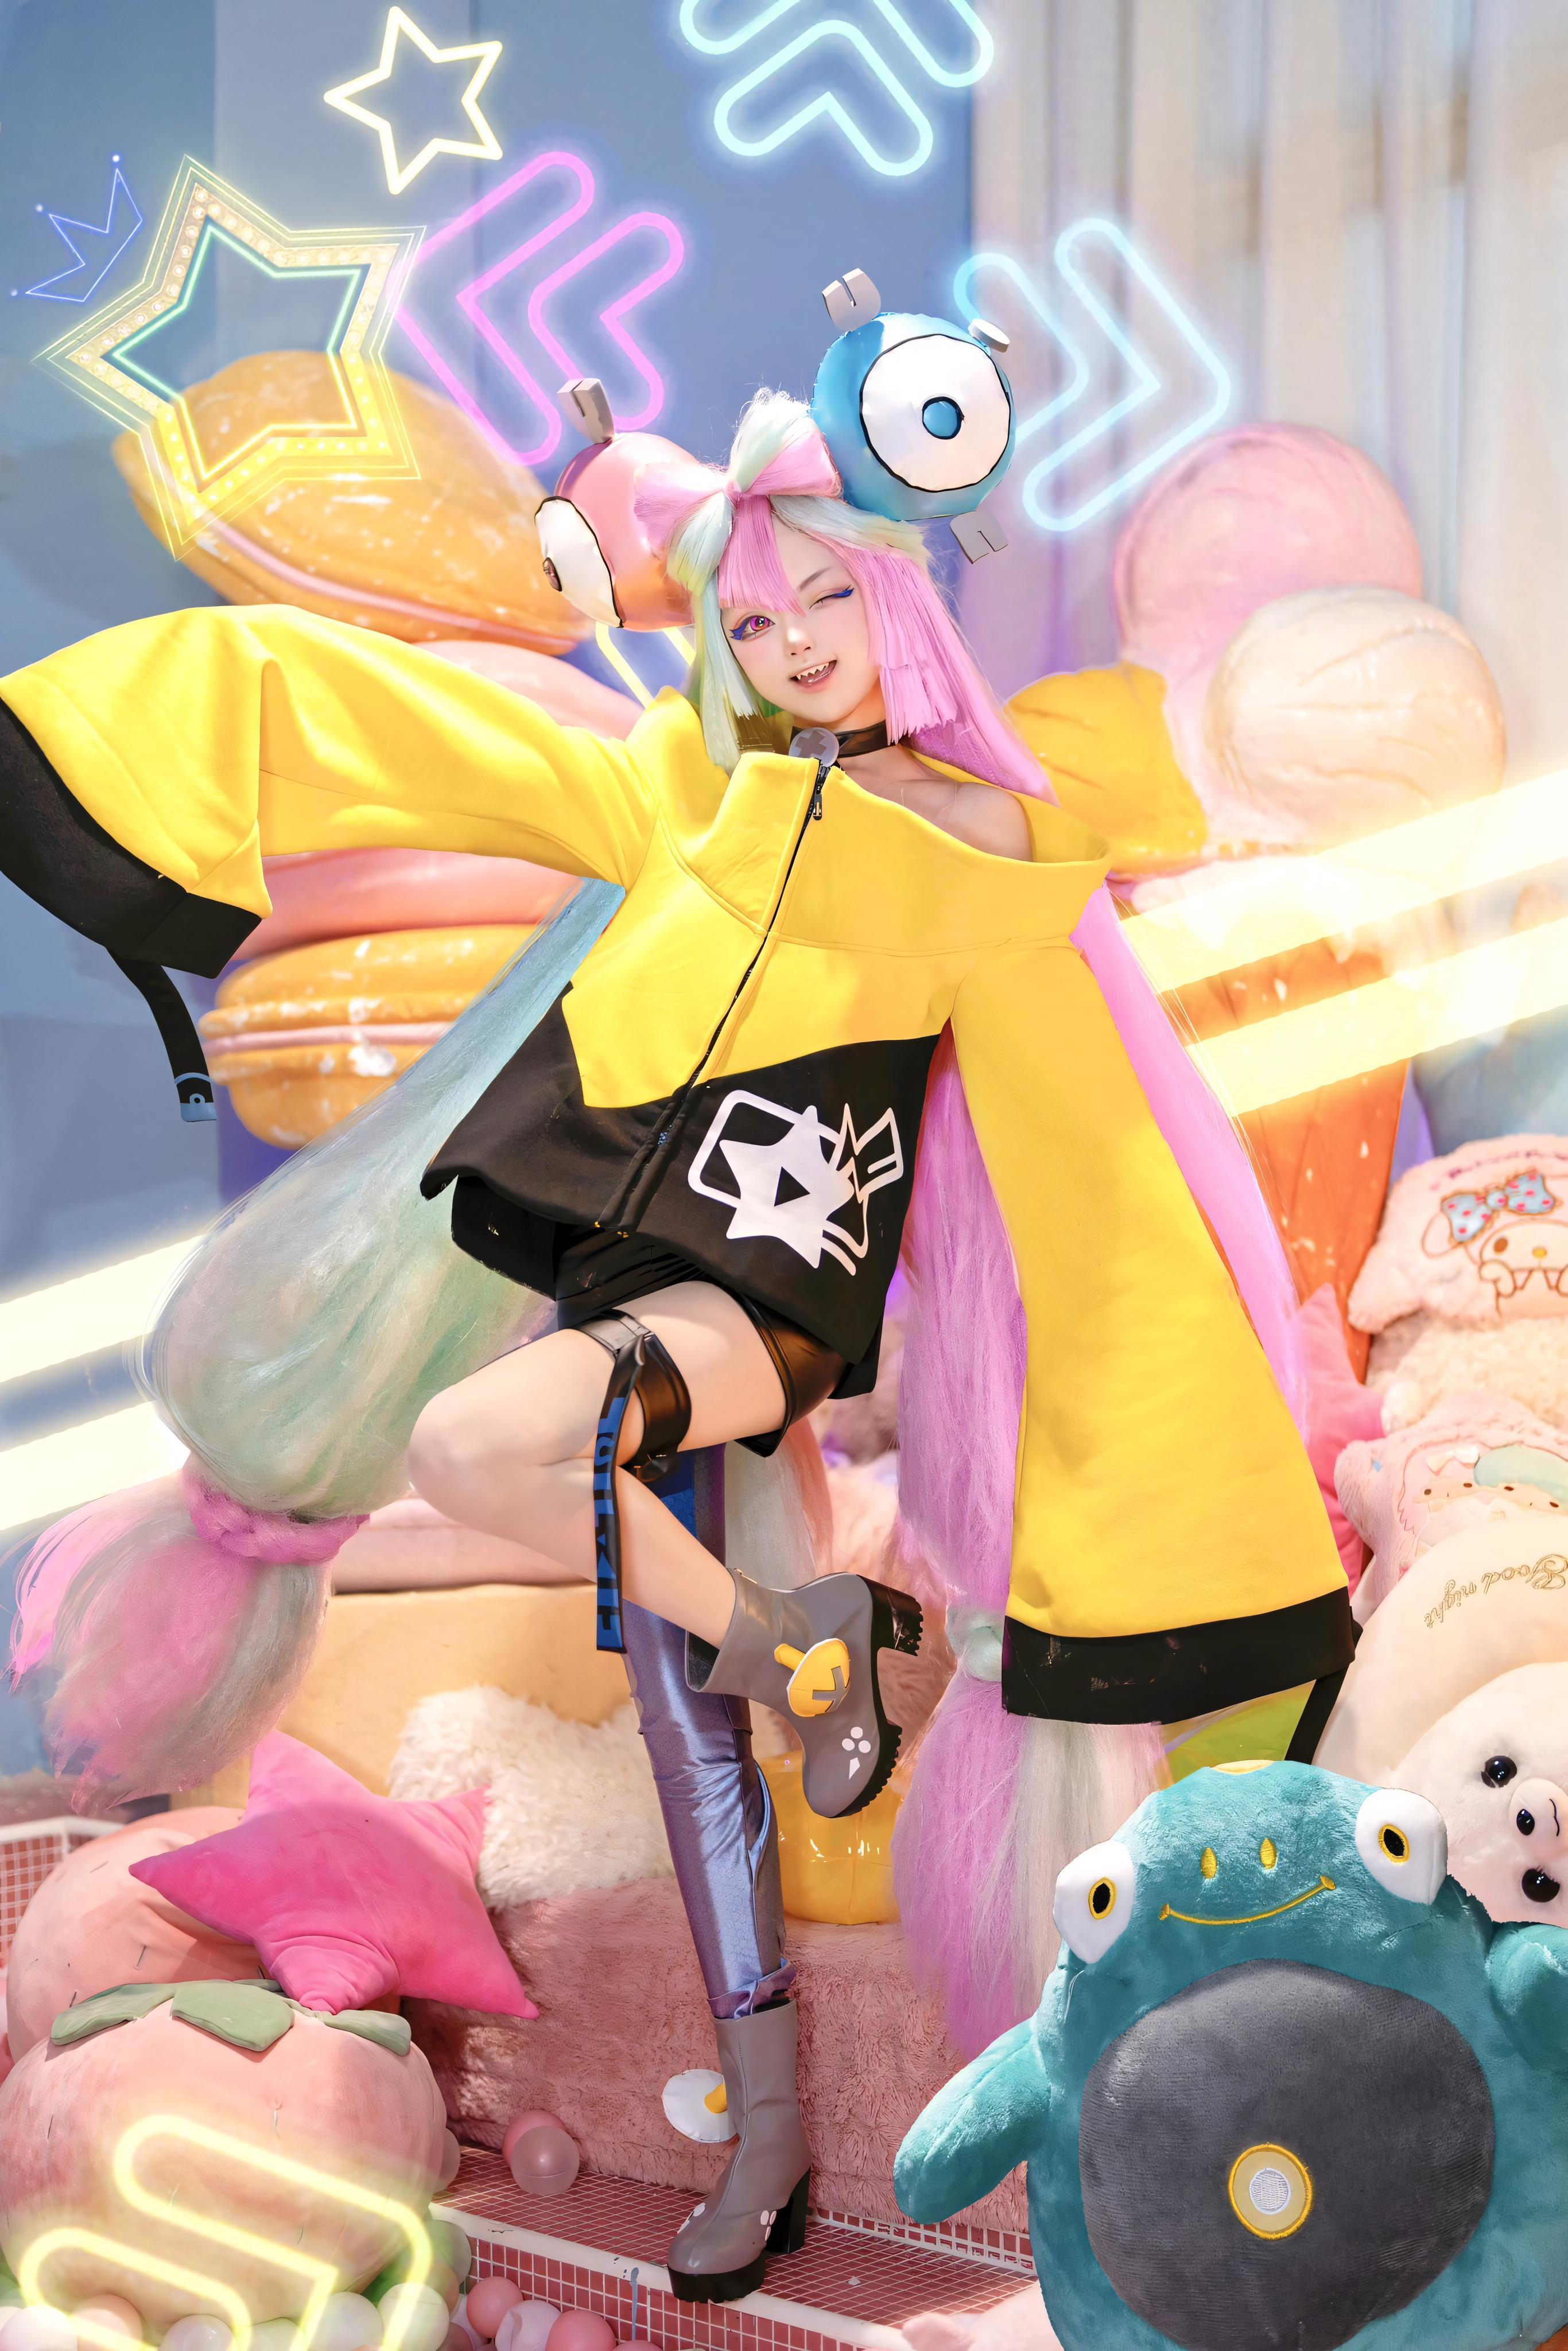 People 2732x4096 Seeuxiaorou cosplay photoshopped yellow jacket smiling oversized outfit Pokémon plush toy Asian